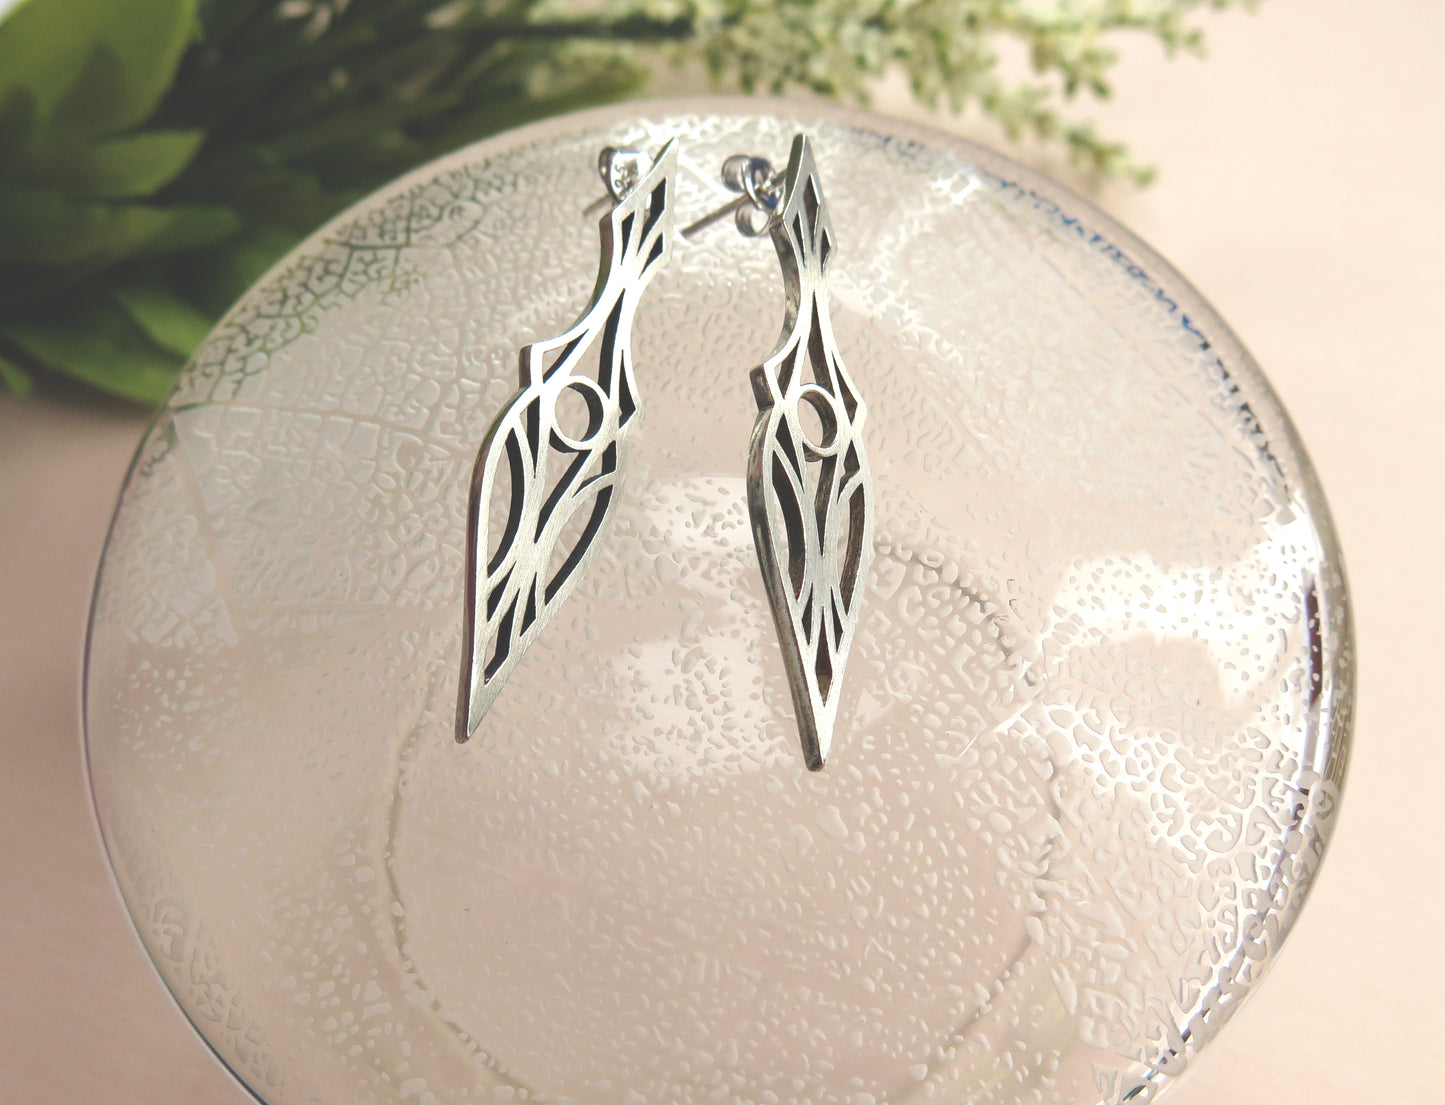 Art Deco stud earrings on a glass plate. Symmetrical and geometric modern design.